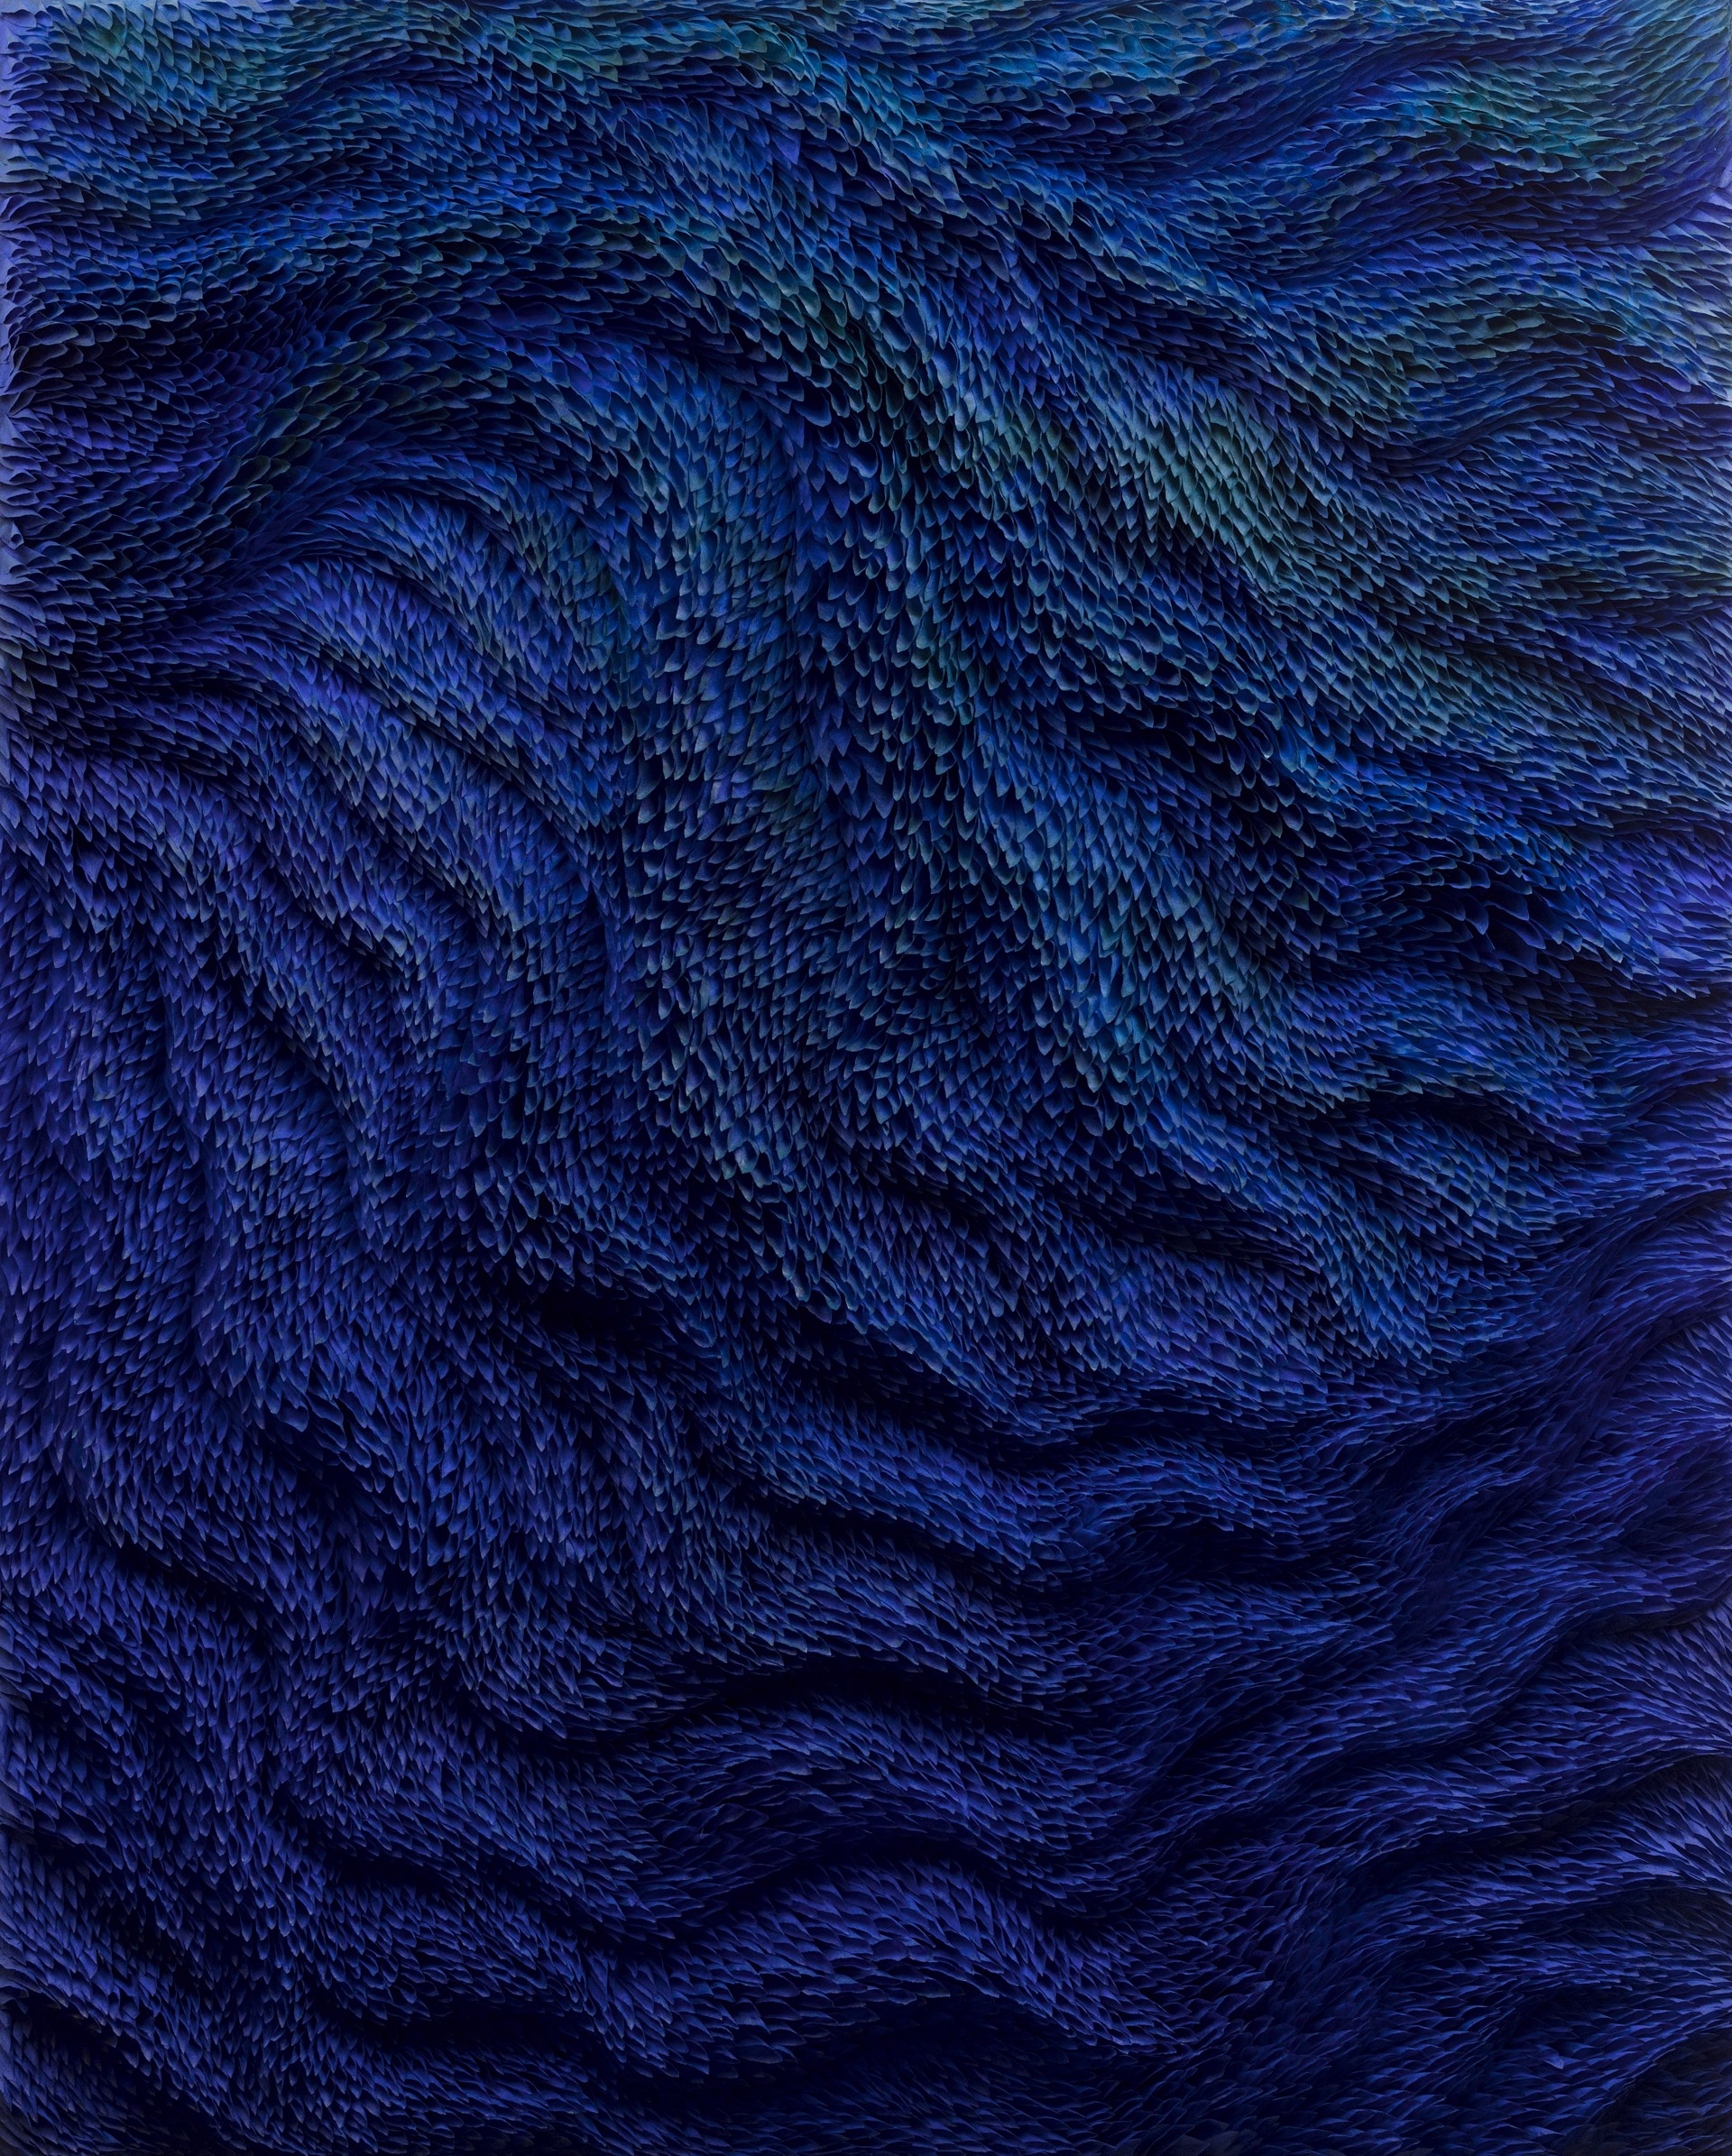 Ocean #16 by Javier Leon Perez